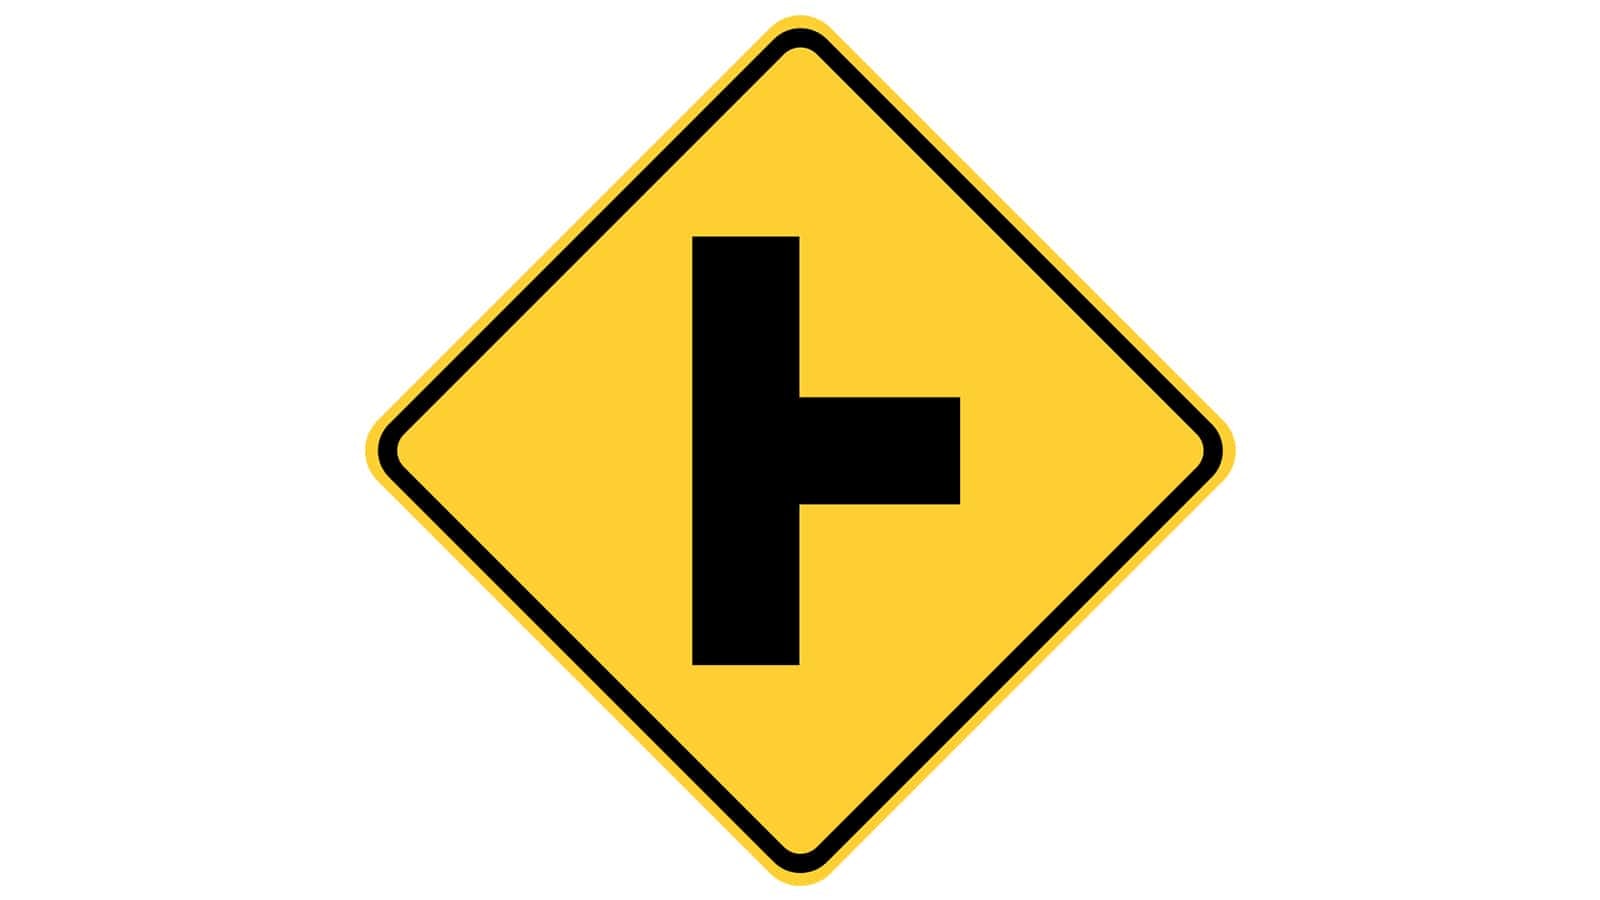 Warning sign Side Road at Perpendicular Angle